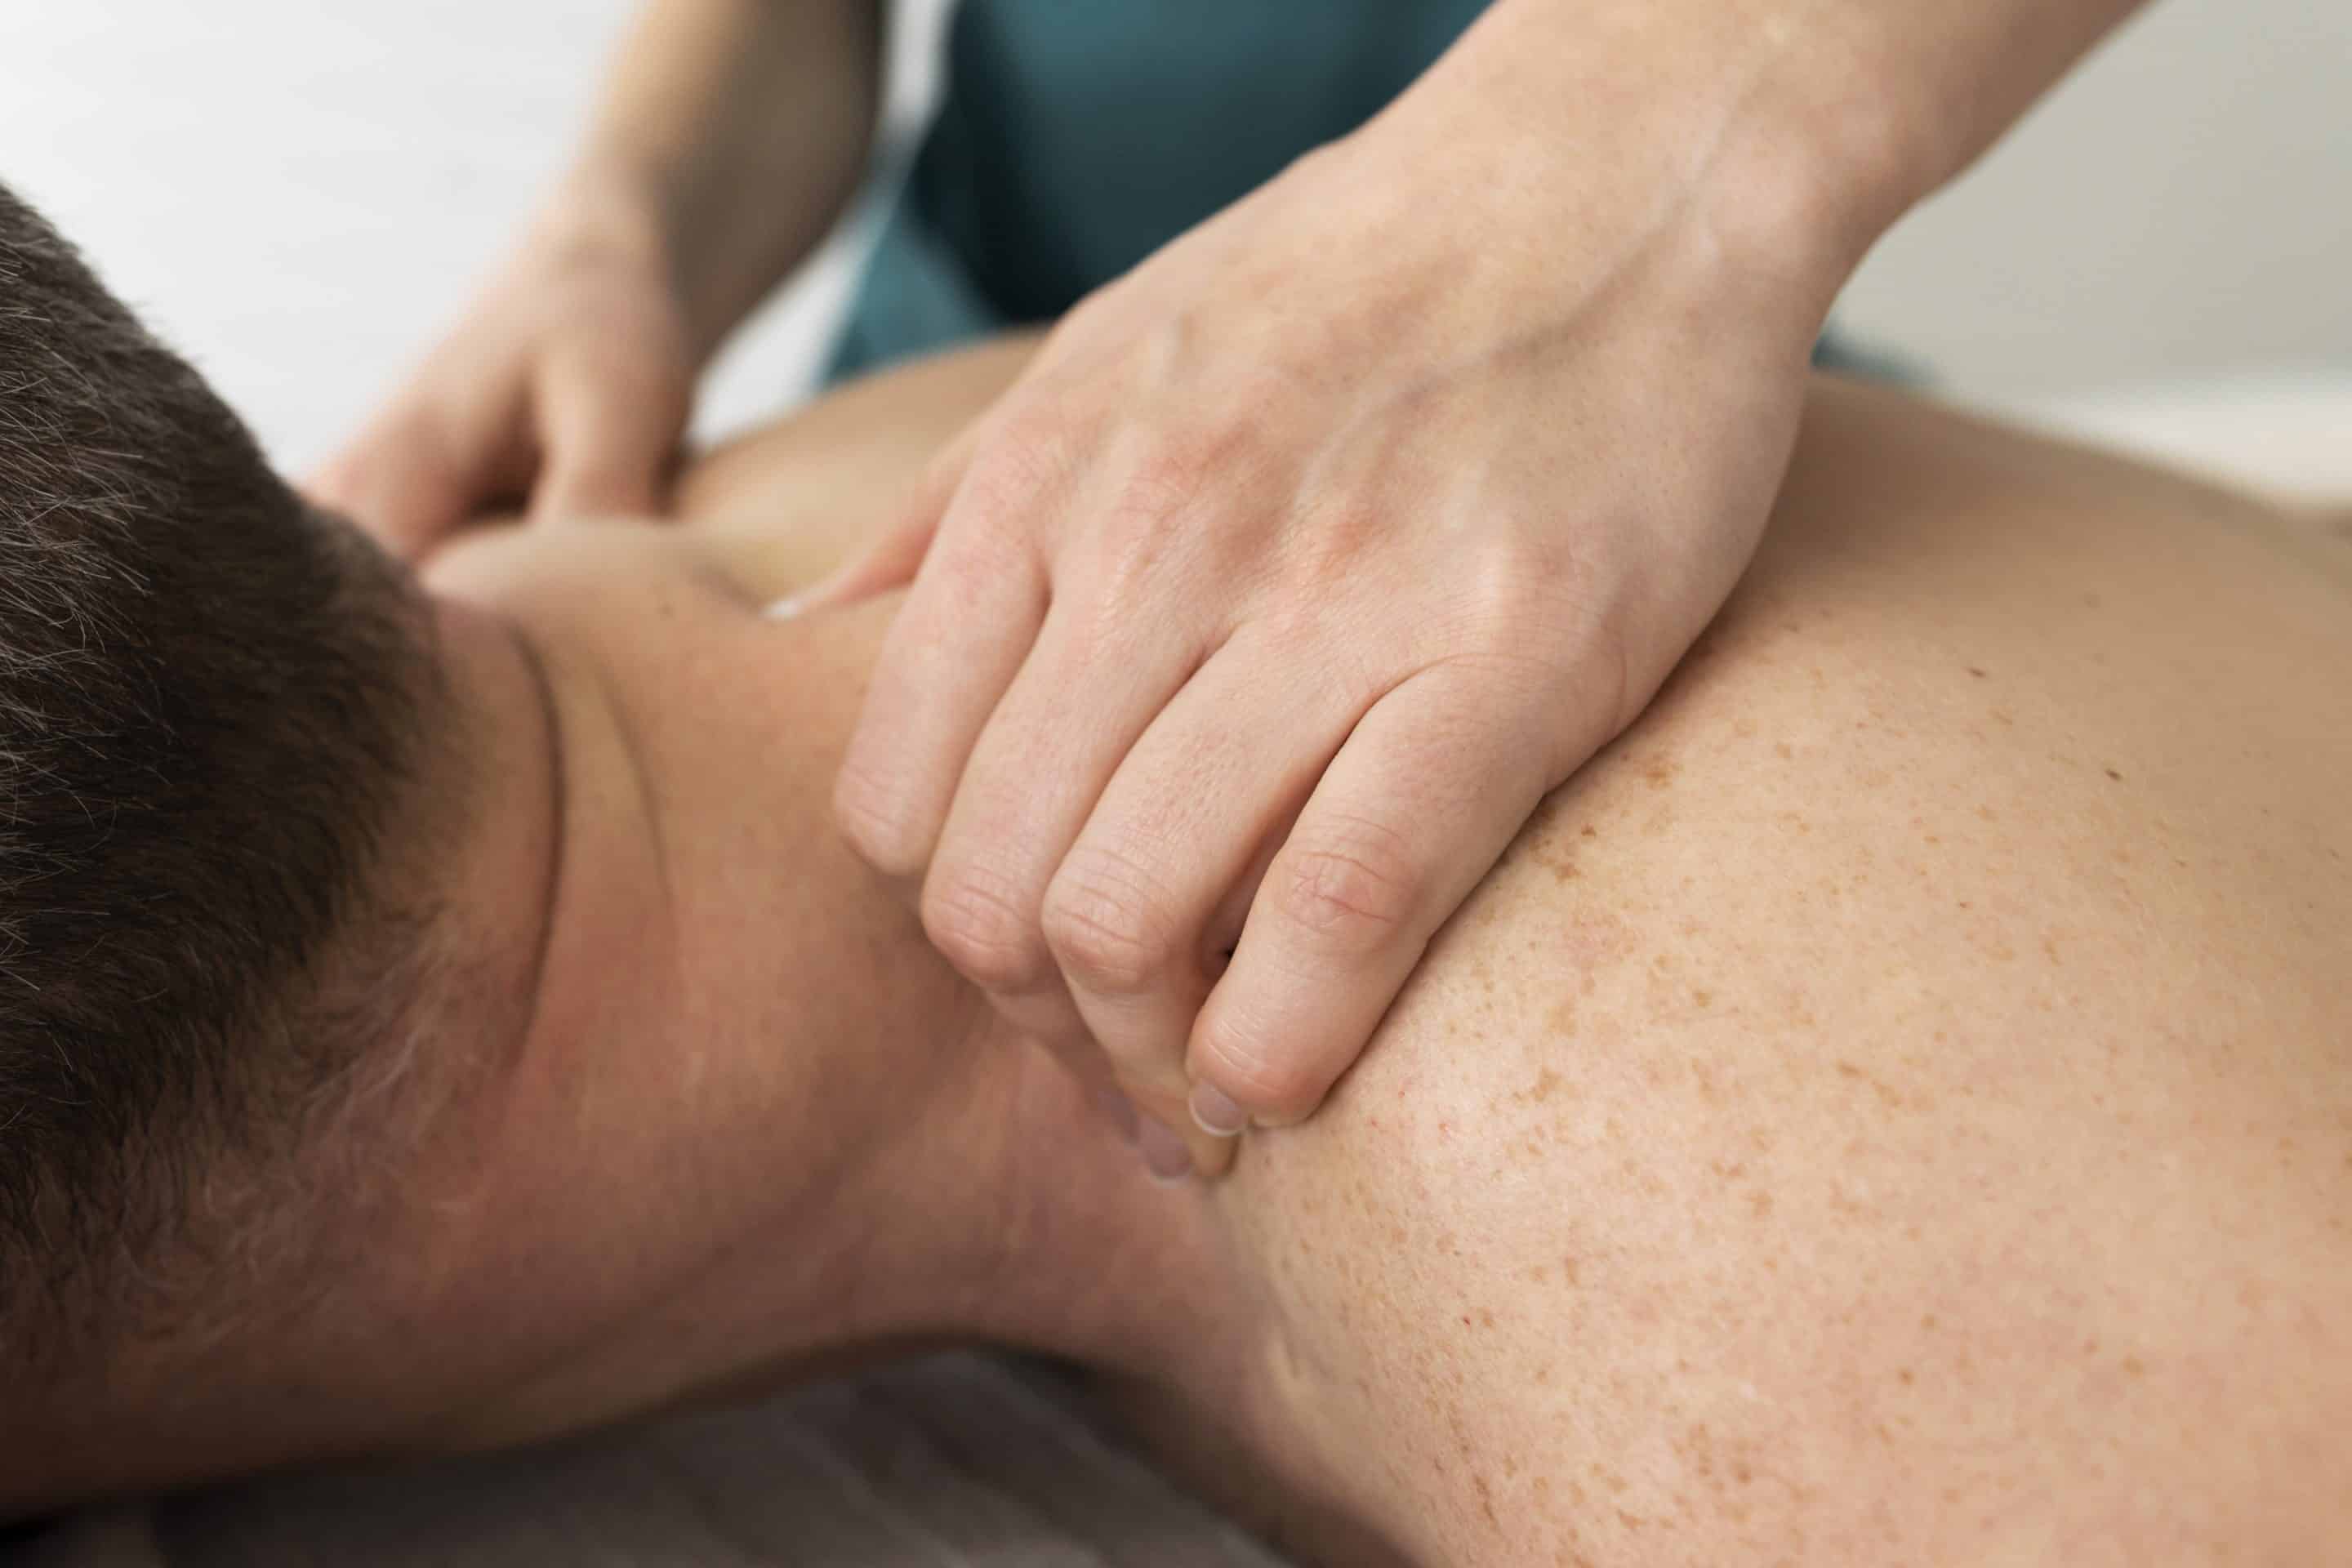 How rough is a deep tissue massage?